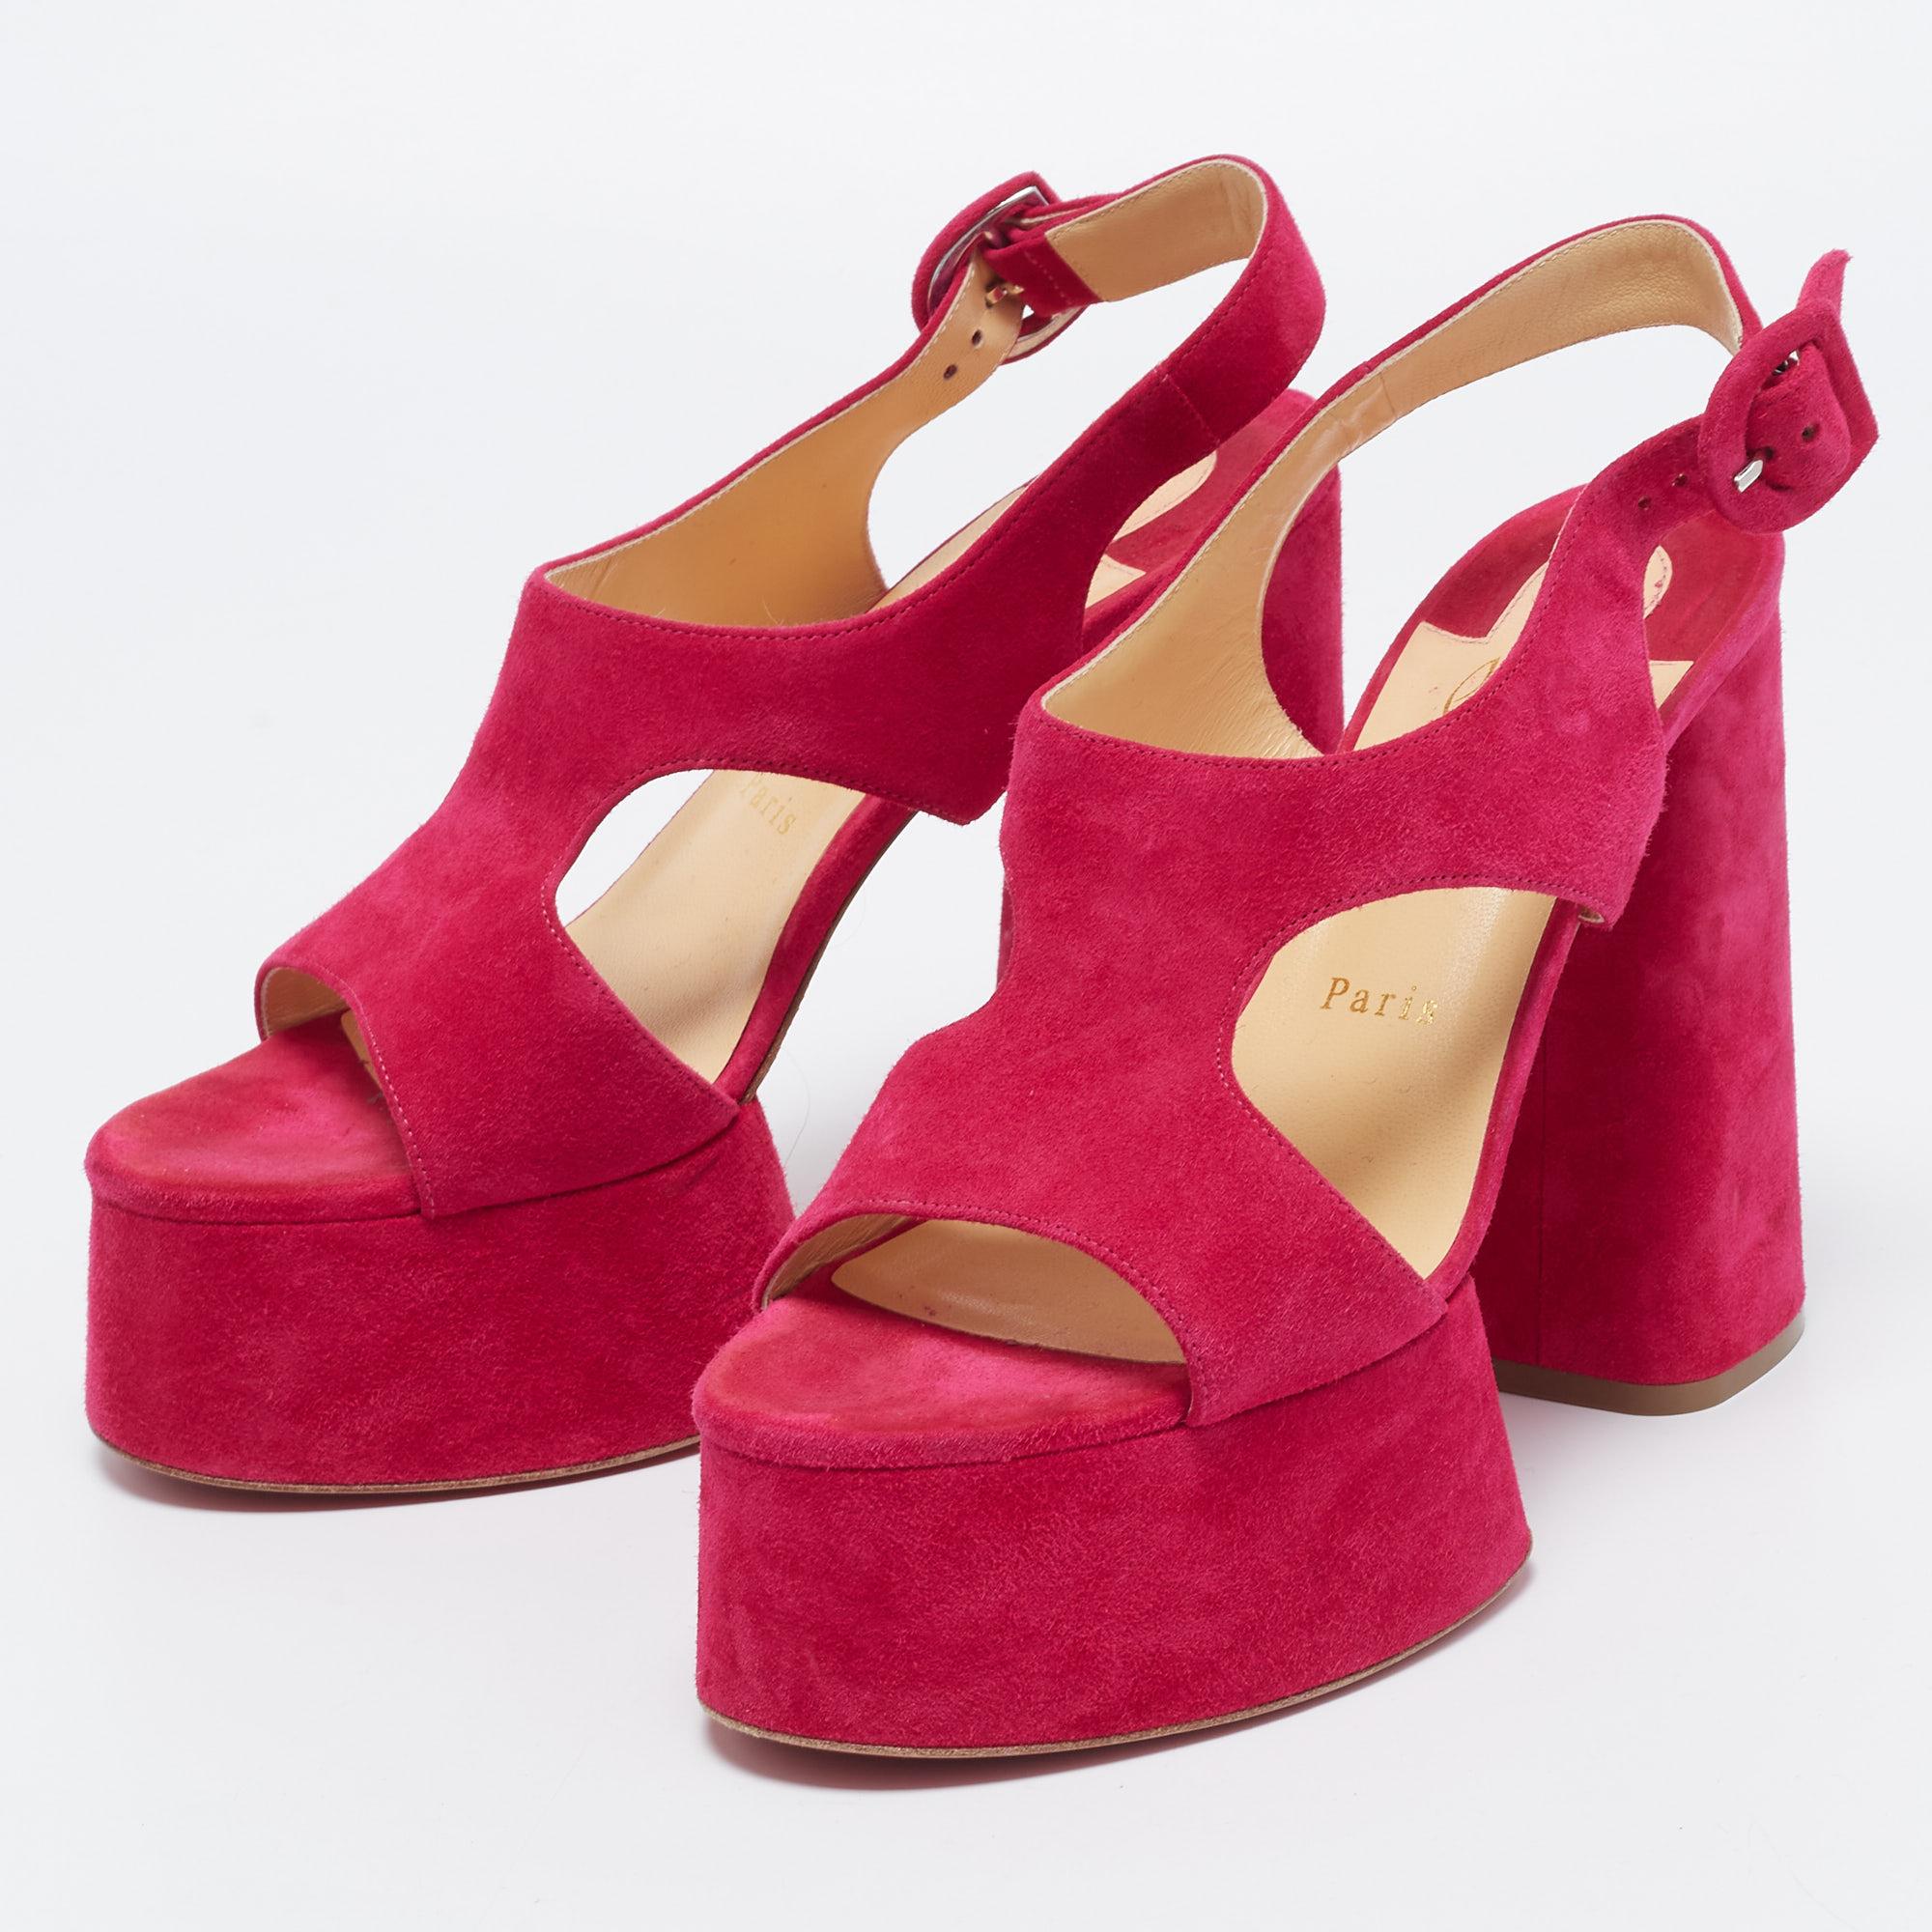 Women's Christian Louboutin Pink Suede Foolish Sandals Size 39